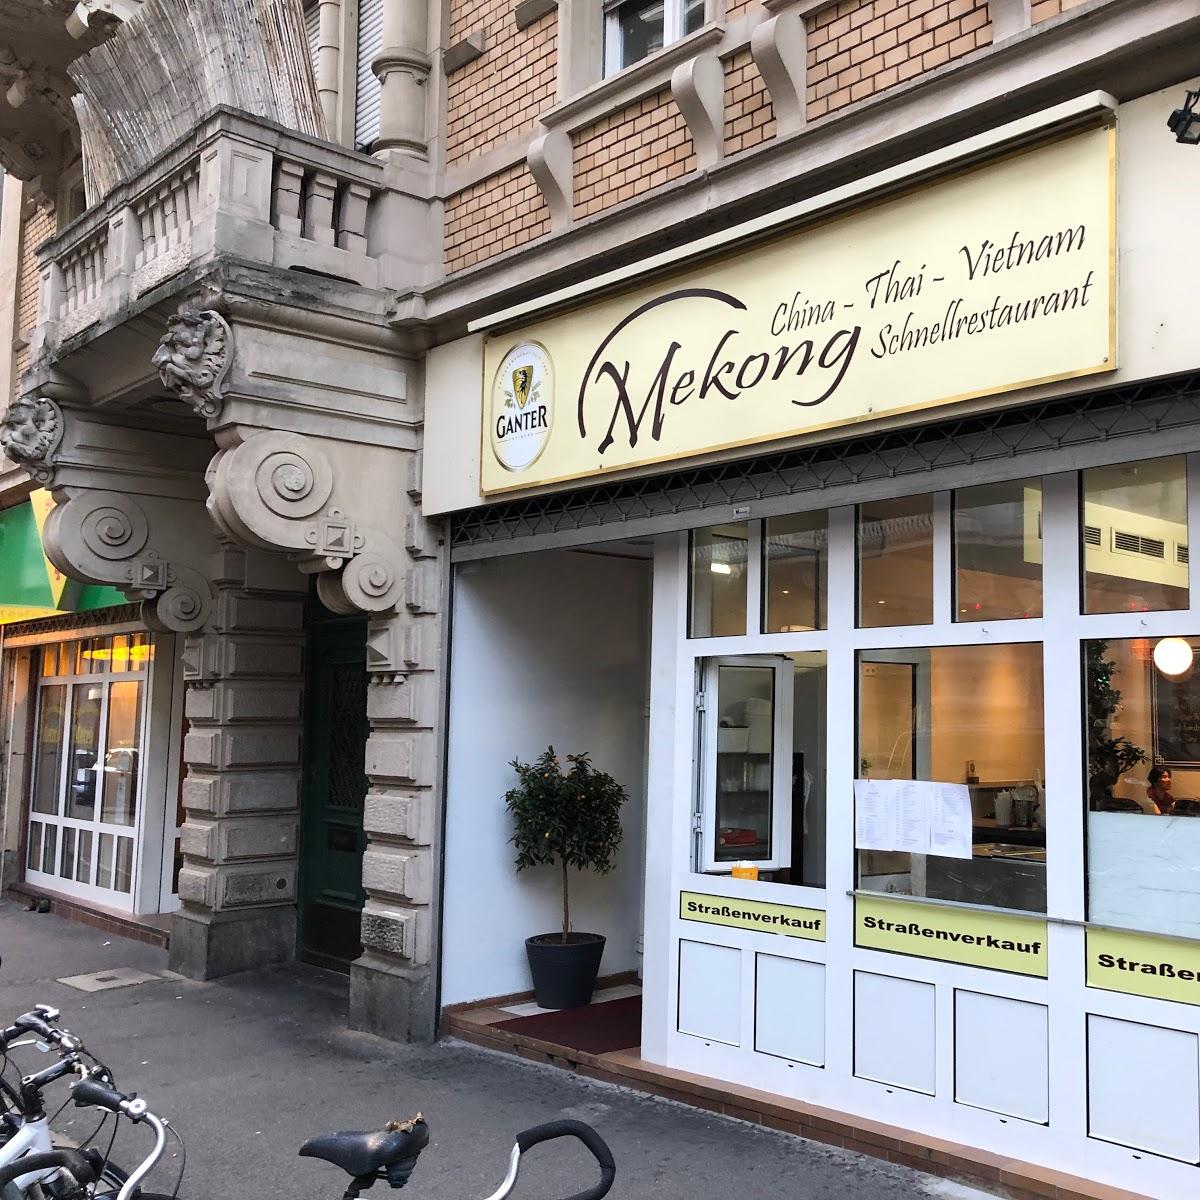 Restaurant "Mekong" in Freiburg im Breisgau